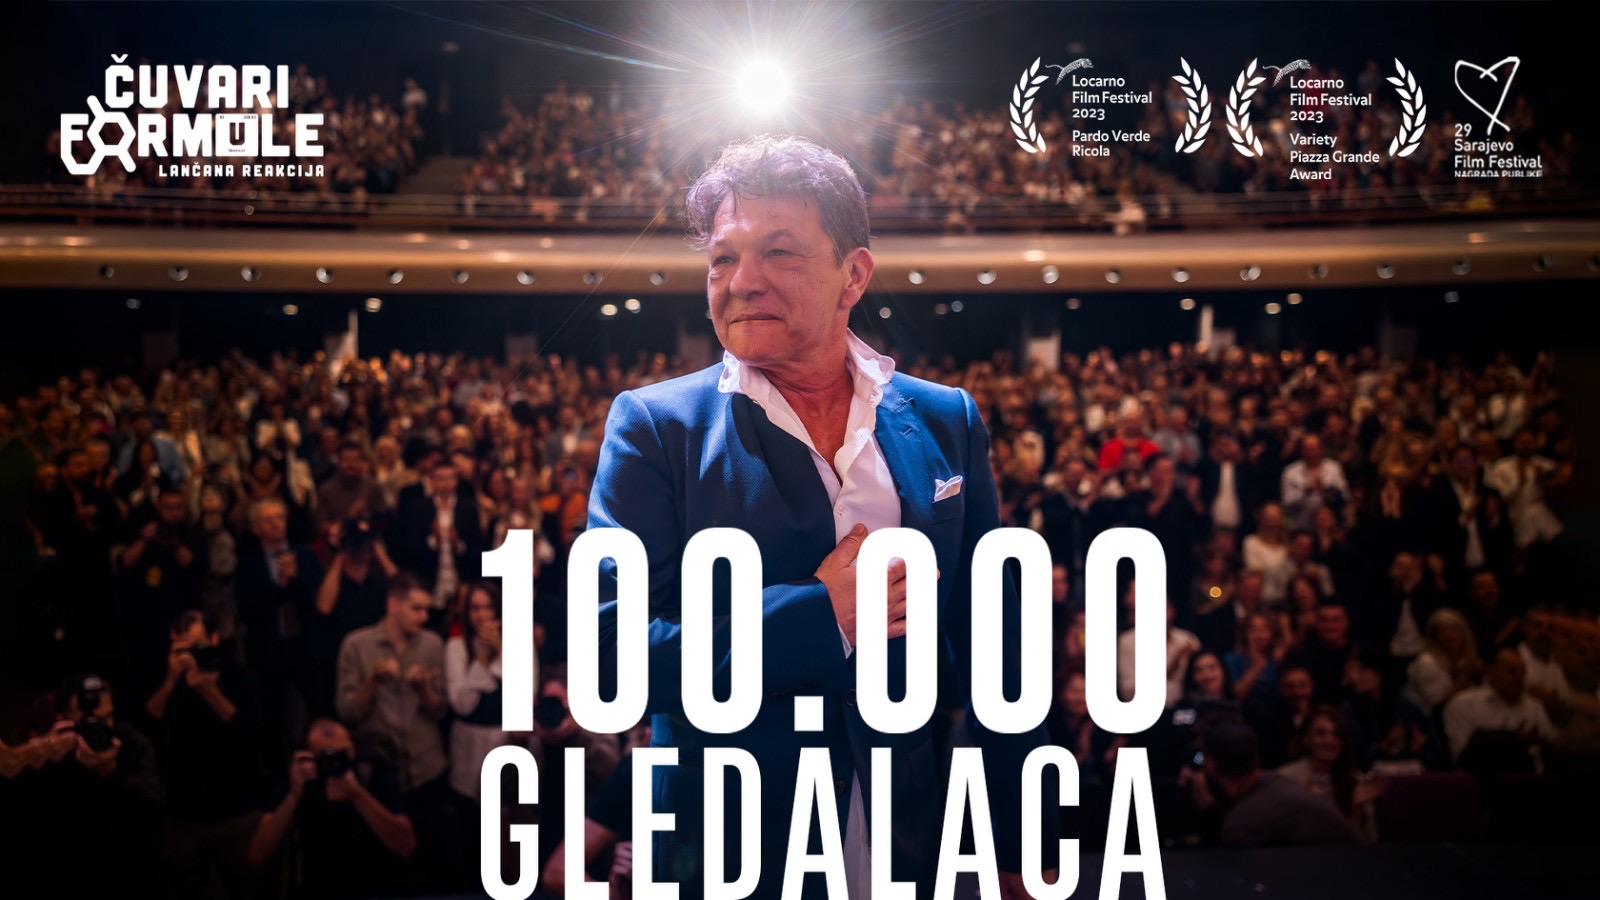 Veliki uspeh filma Dragana Bjelogrlića: „Čuvare formule" pogledalo 100.000 gledalaca